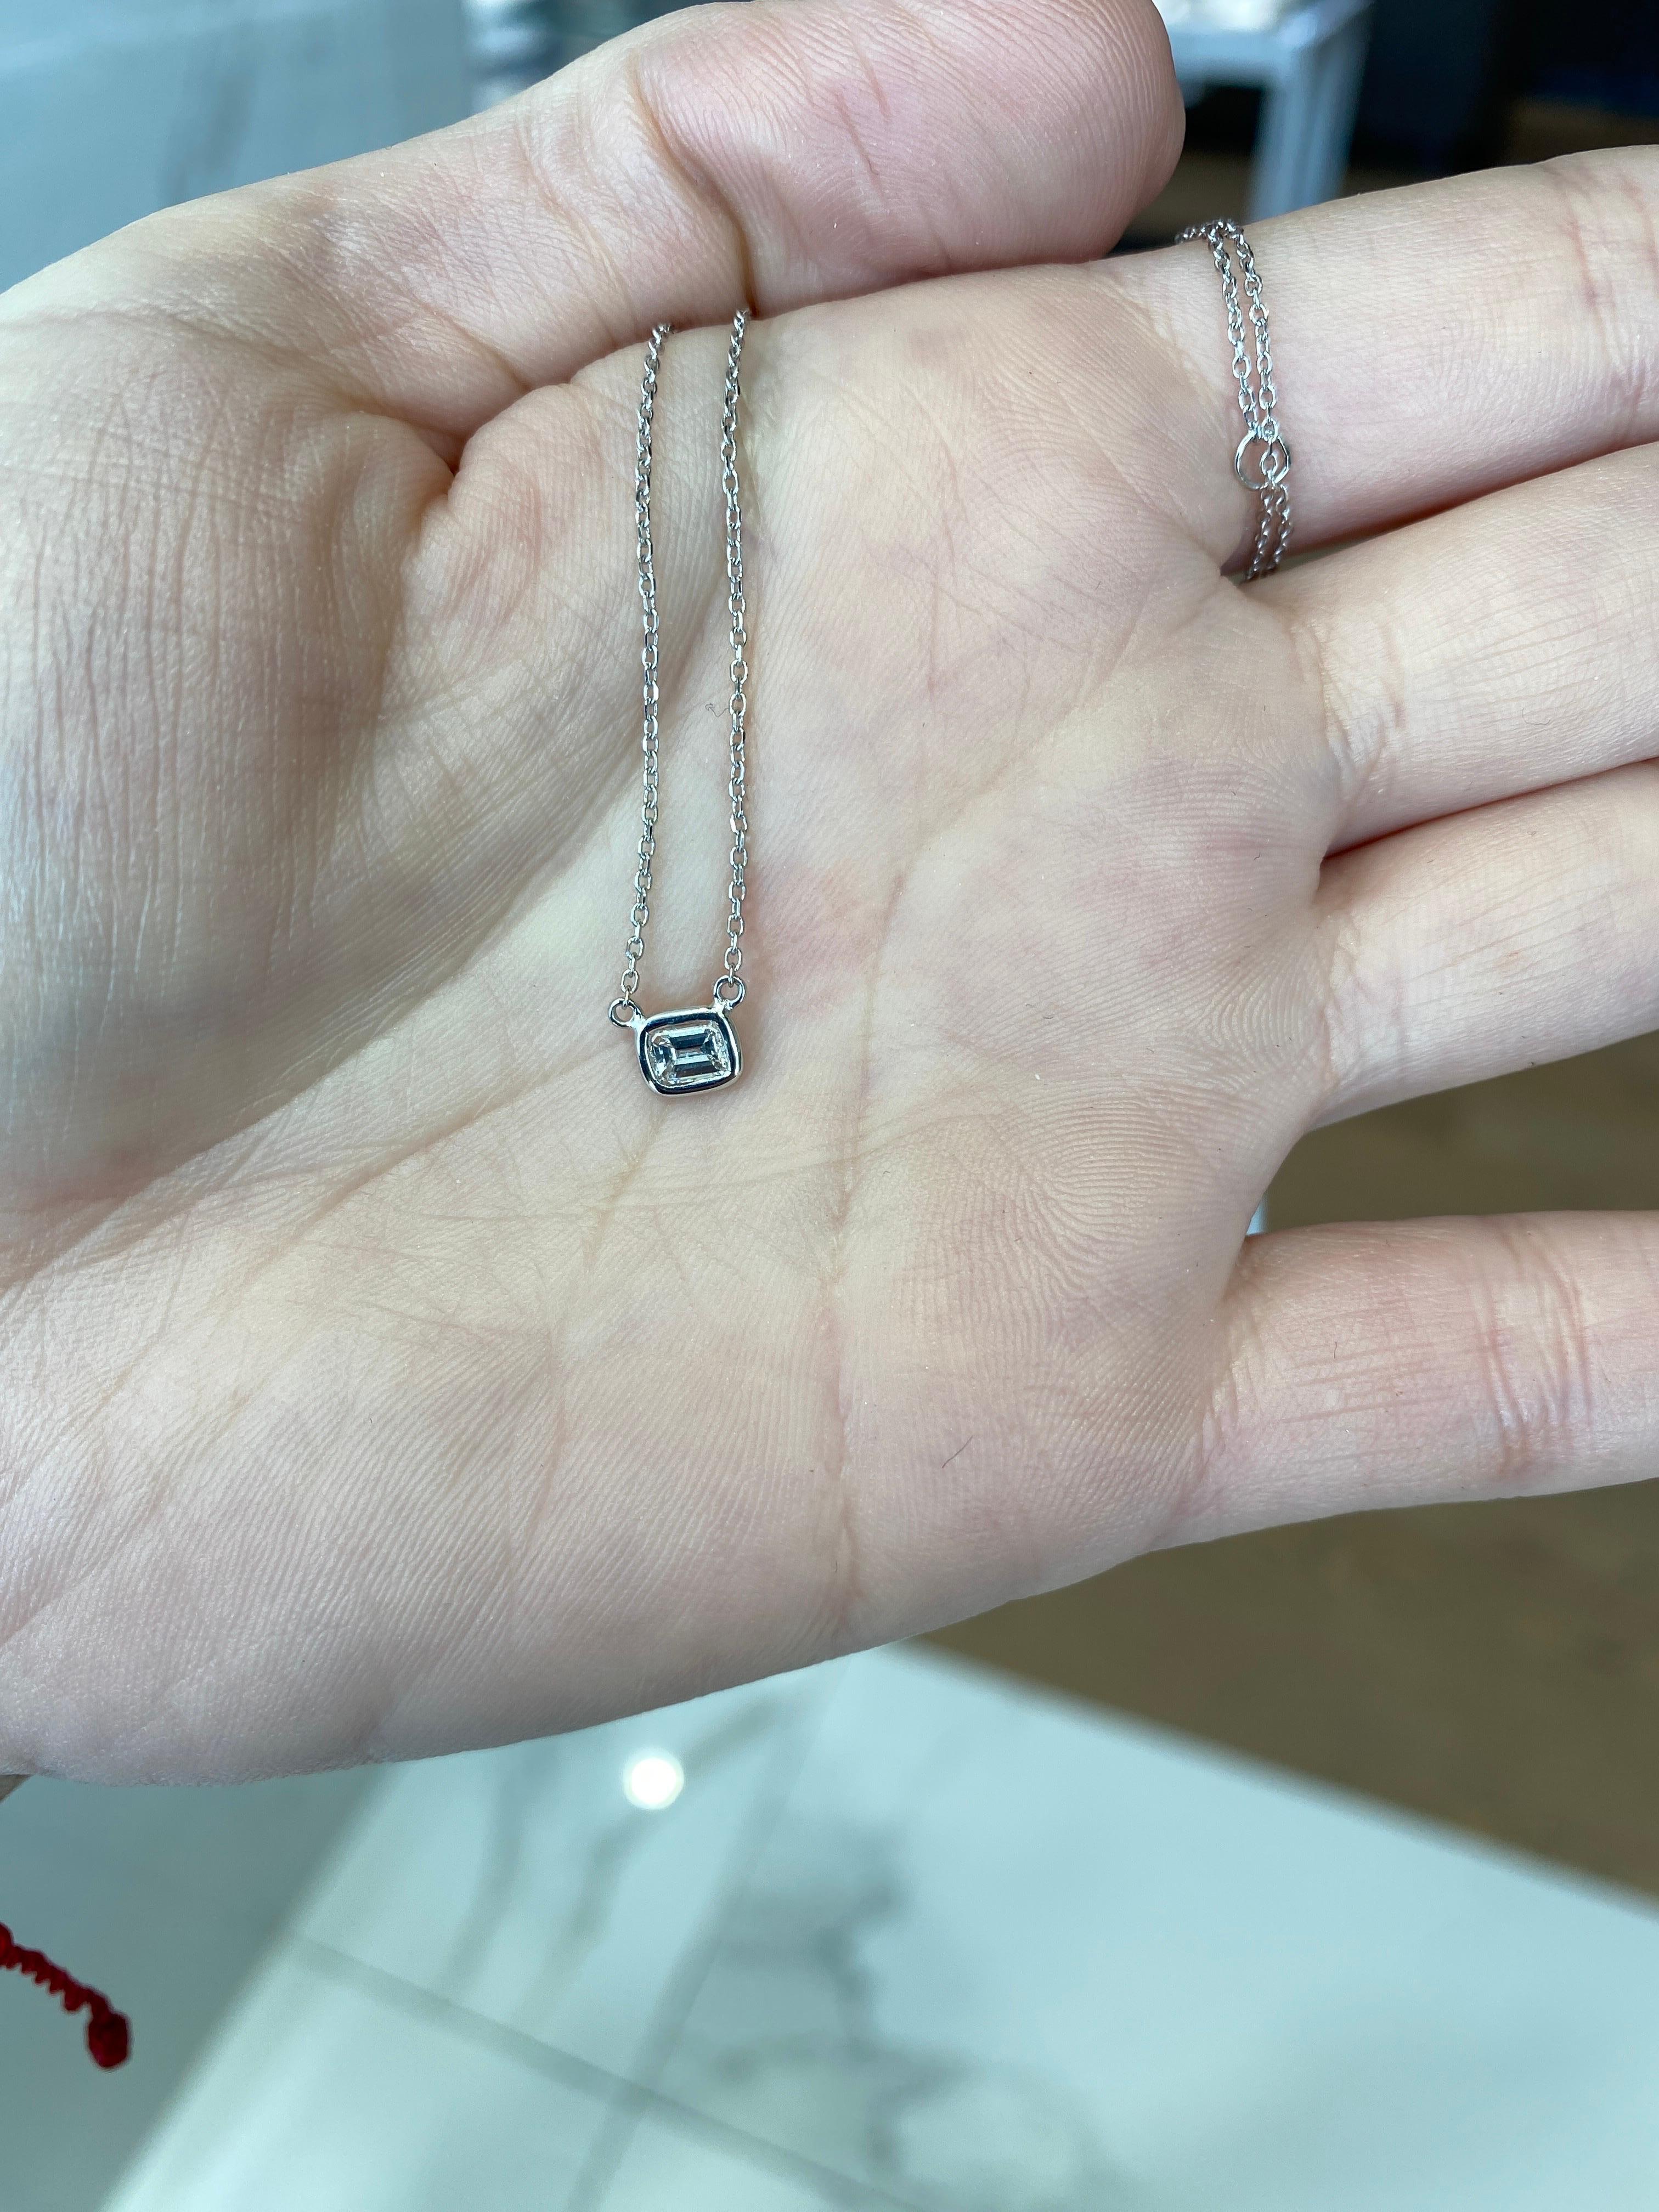 14k White Gold 0.23 Carat Natural Emerald Cut Diamond Pendant Necklace  For Sale 1